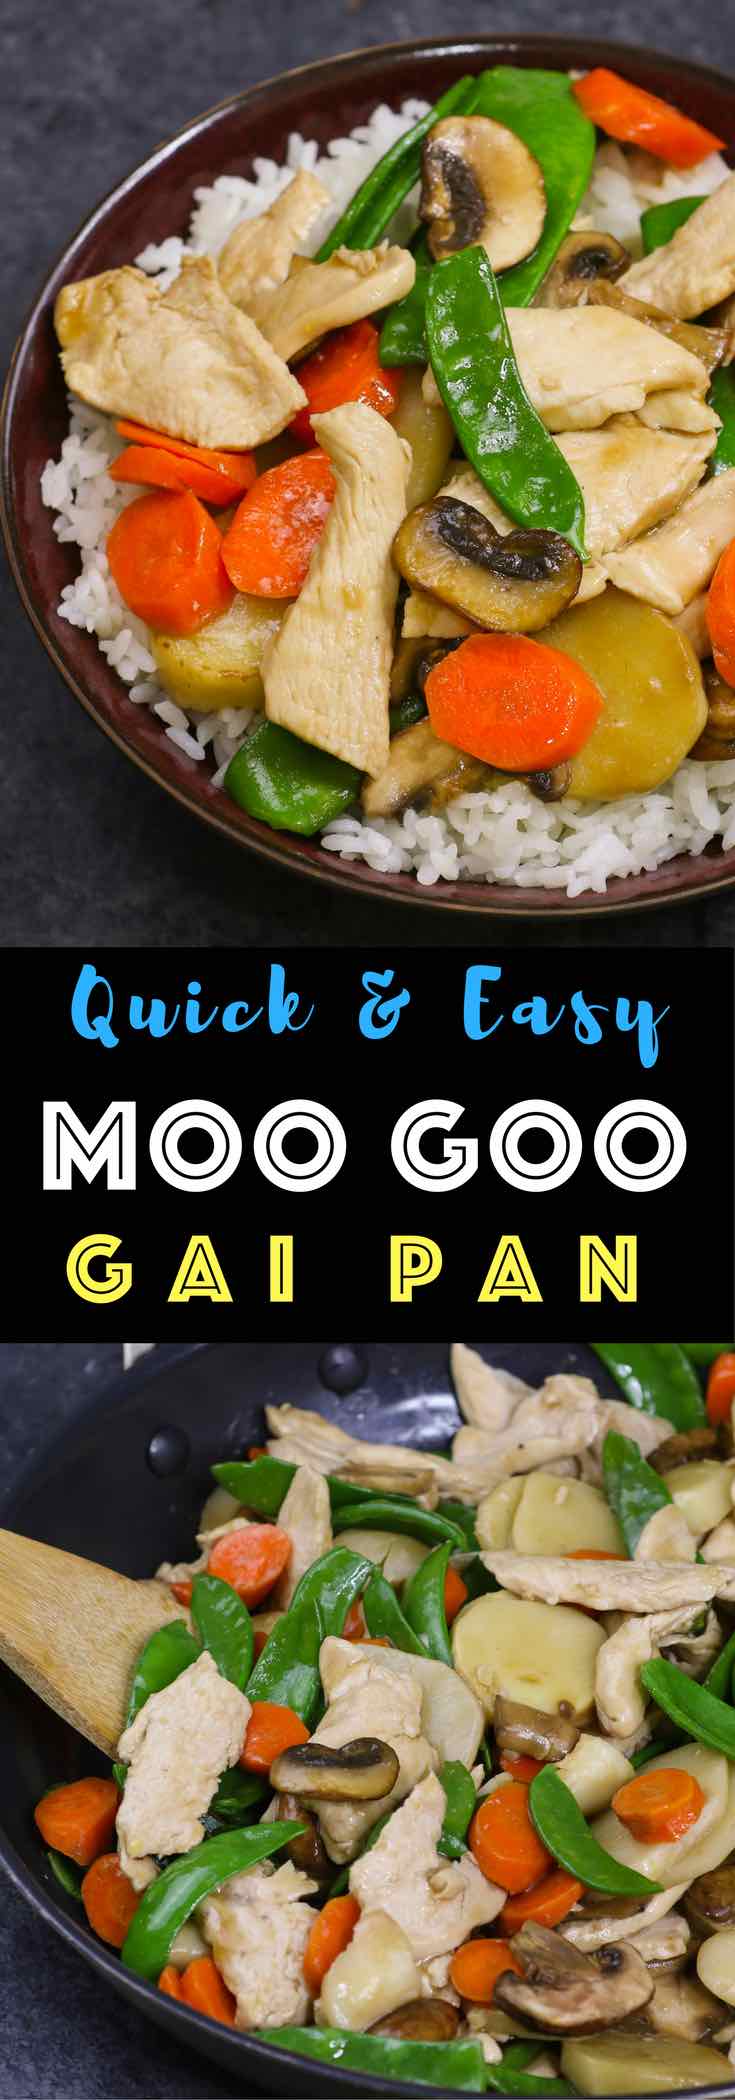 Moo Goo Gai Pan | TipBuzz